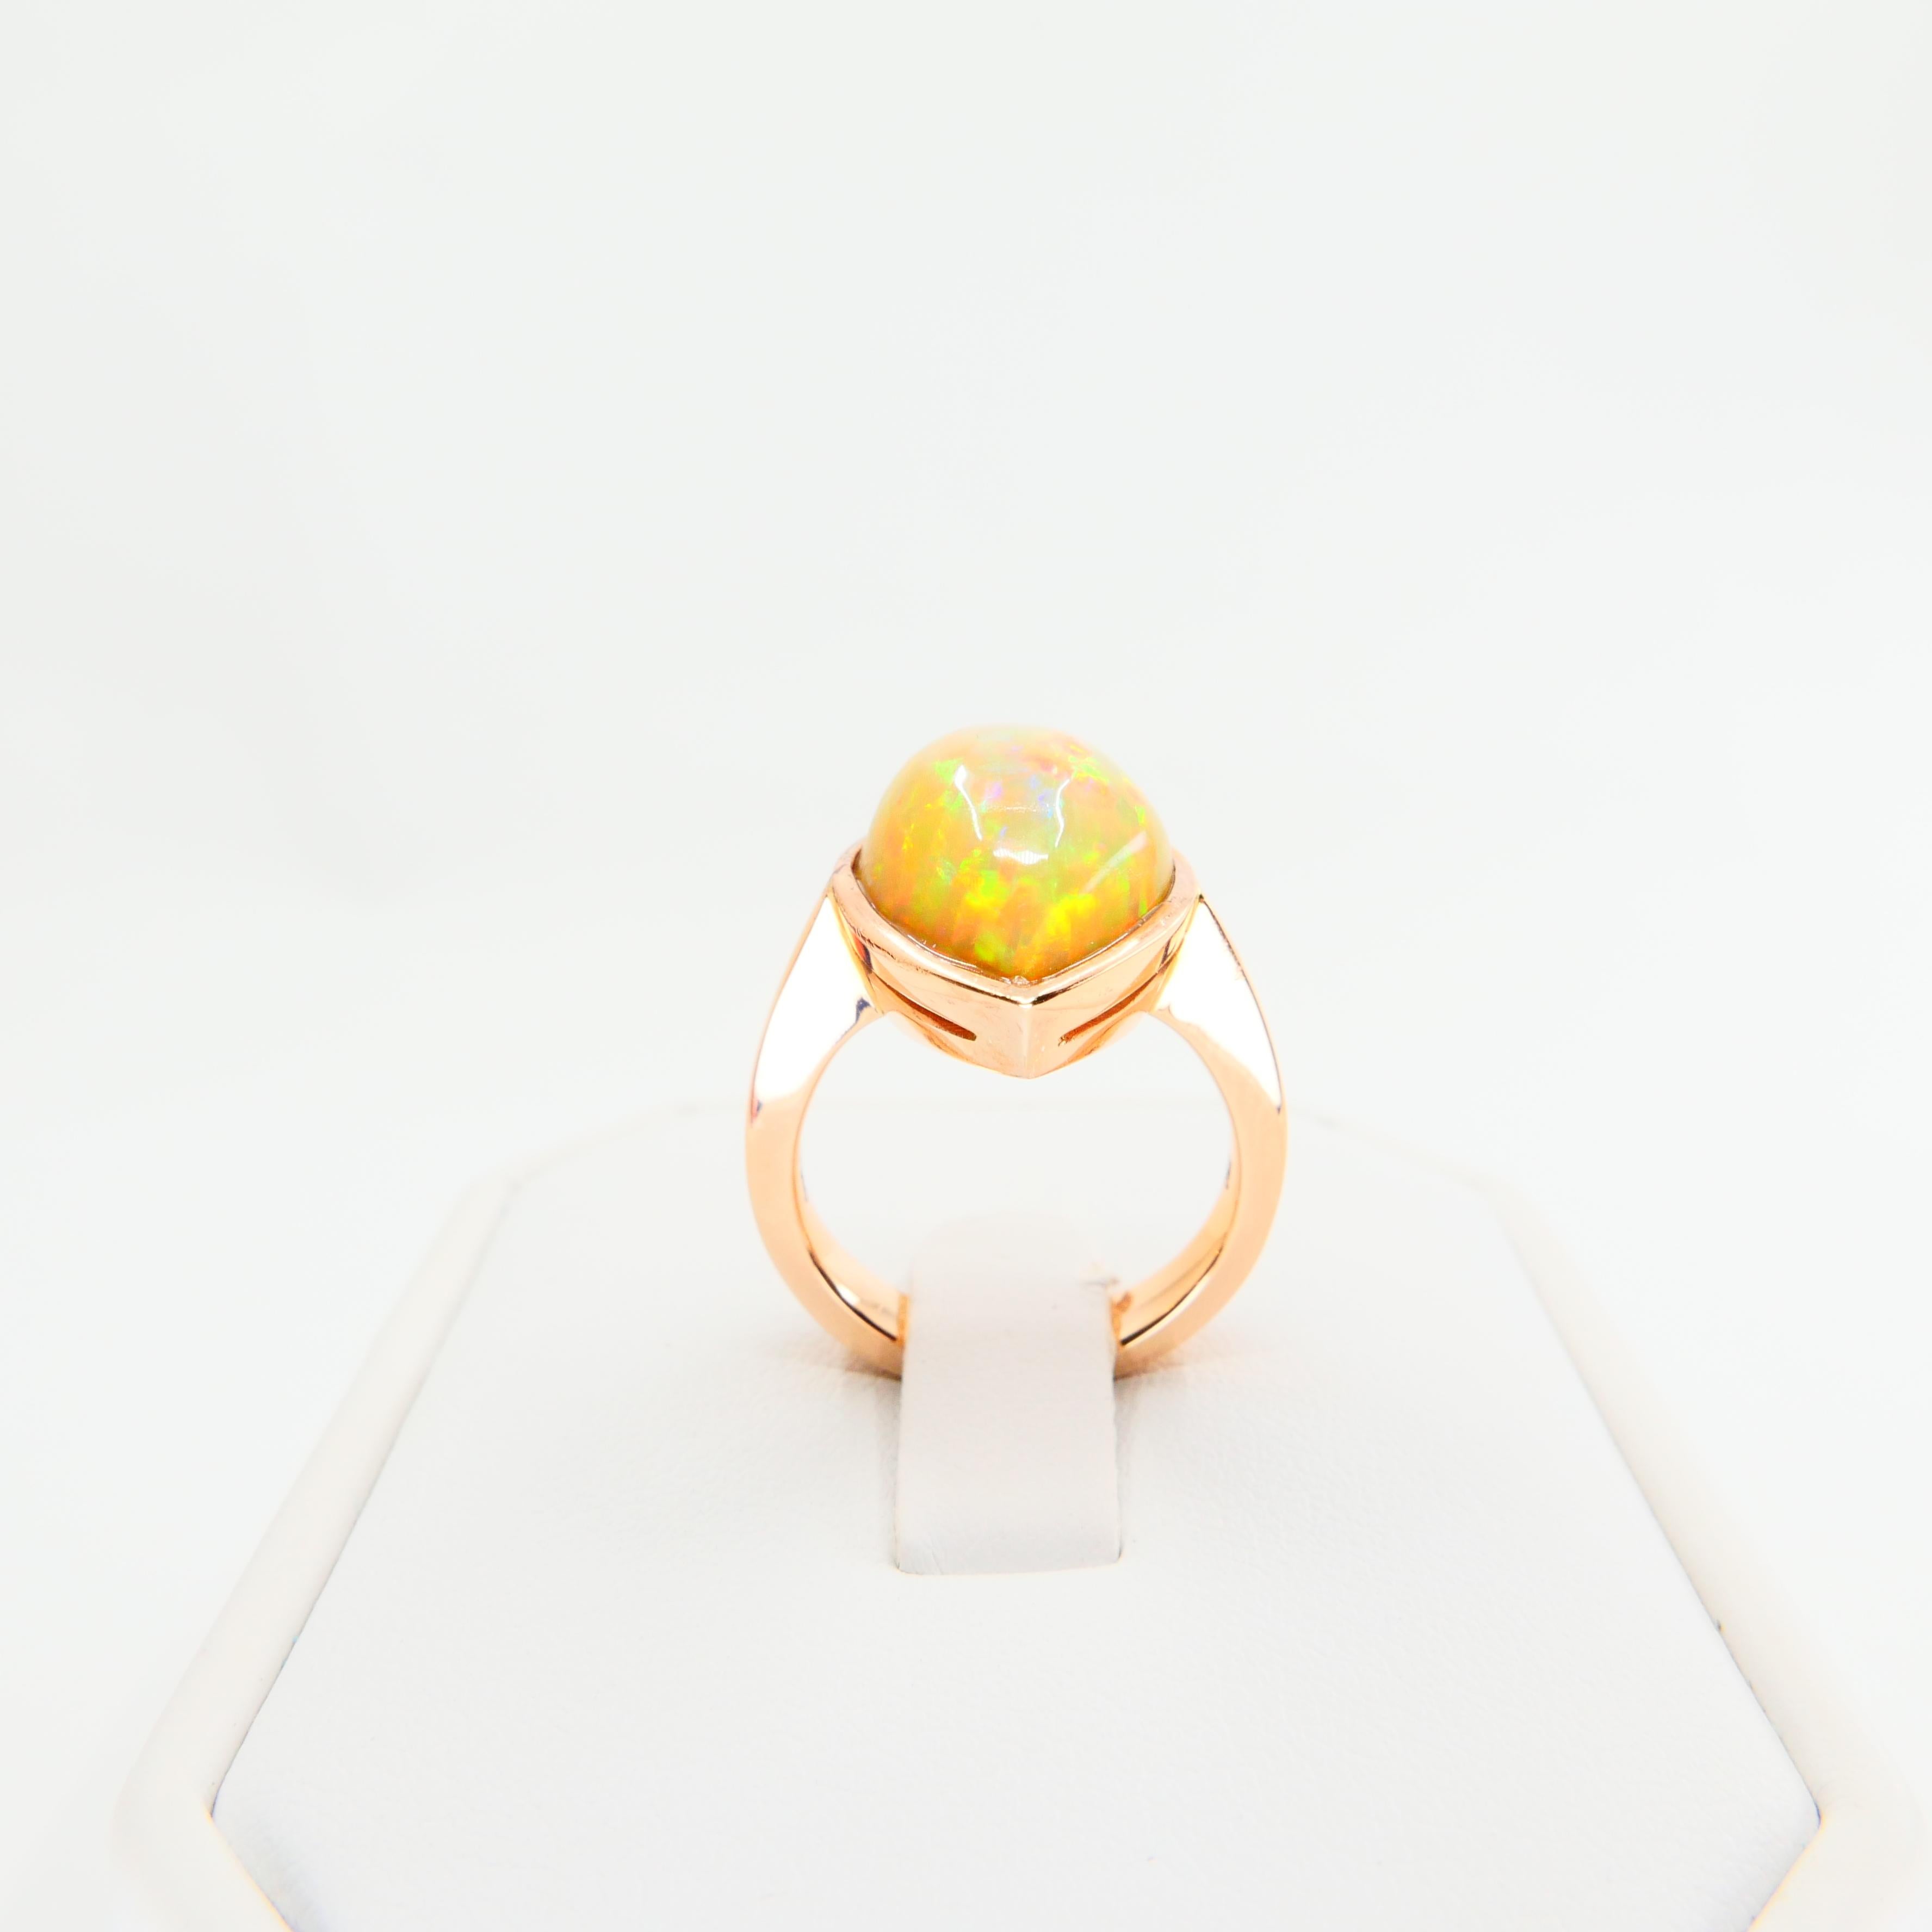 5.85 Carat Opal Ring Set in 18 Karat Gold Colorful Red, Green, Orange and Yellow 9